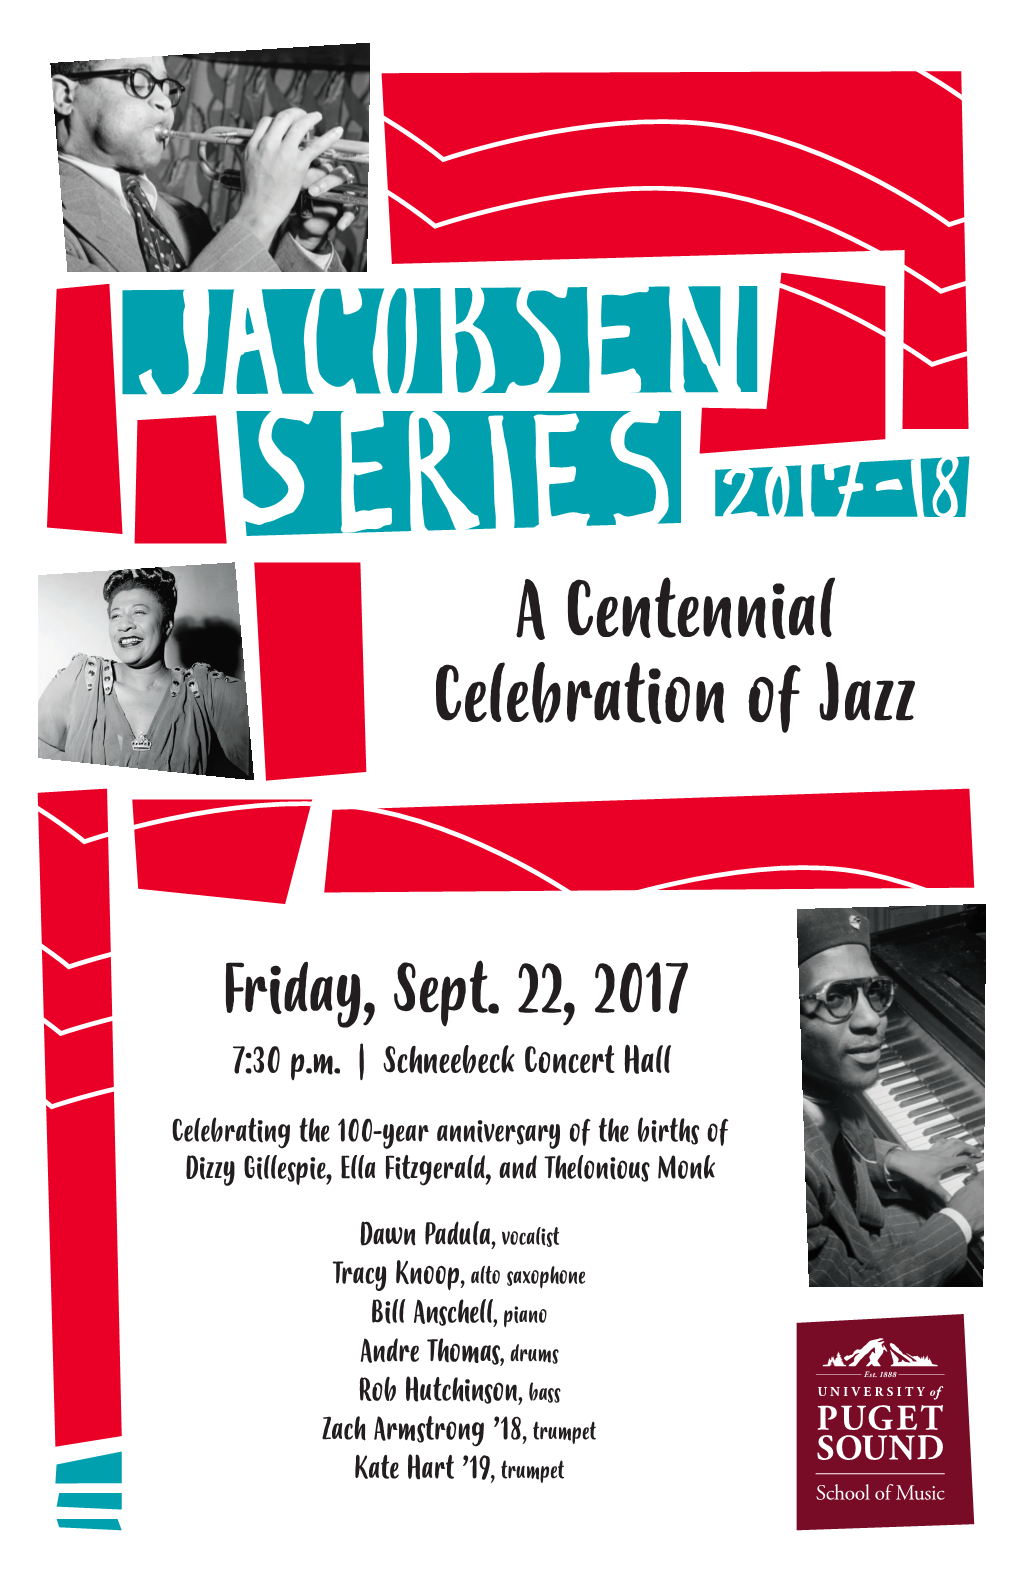 A Centennial Celebration of Jazz